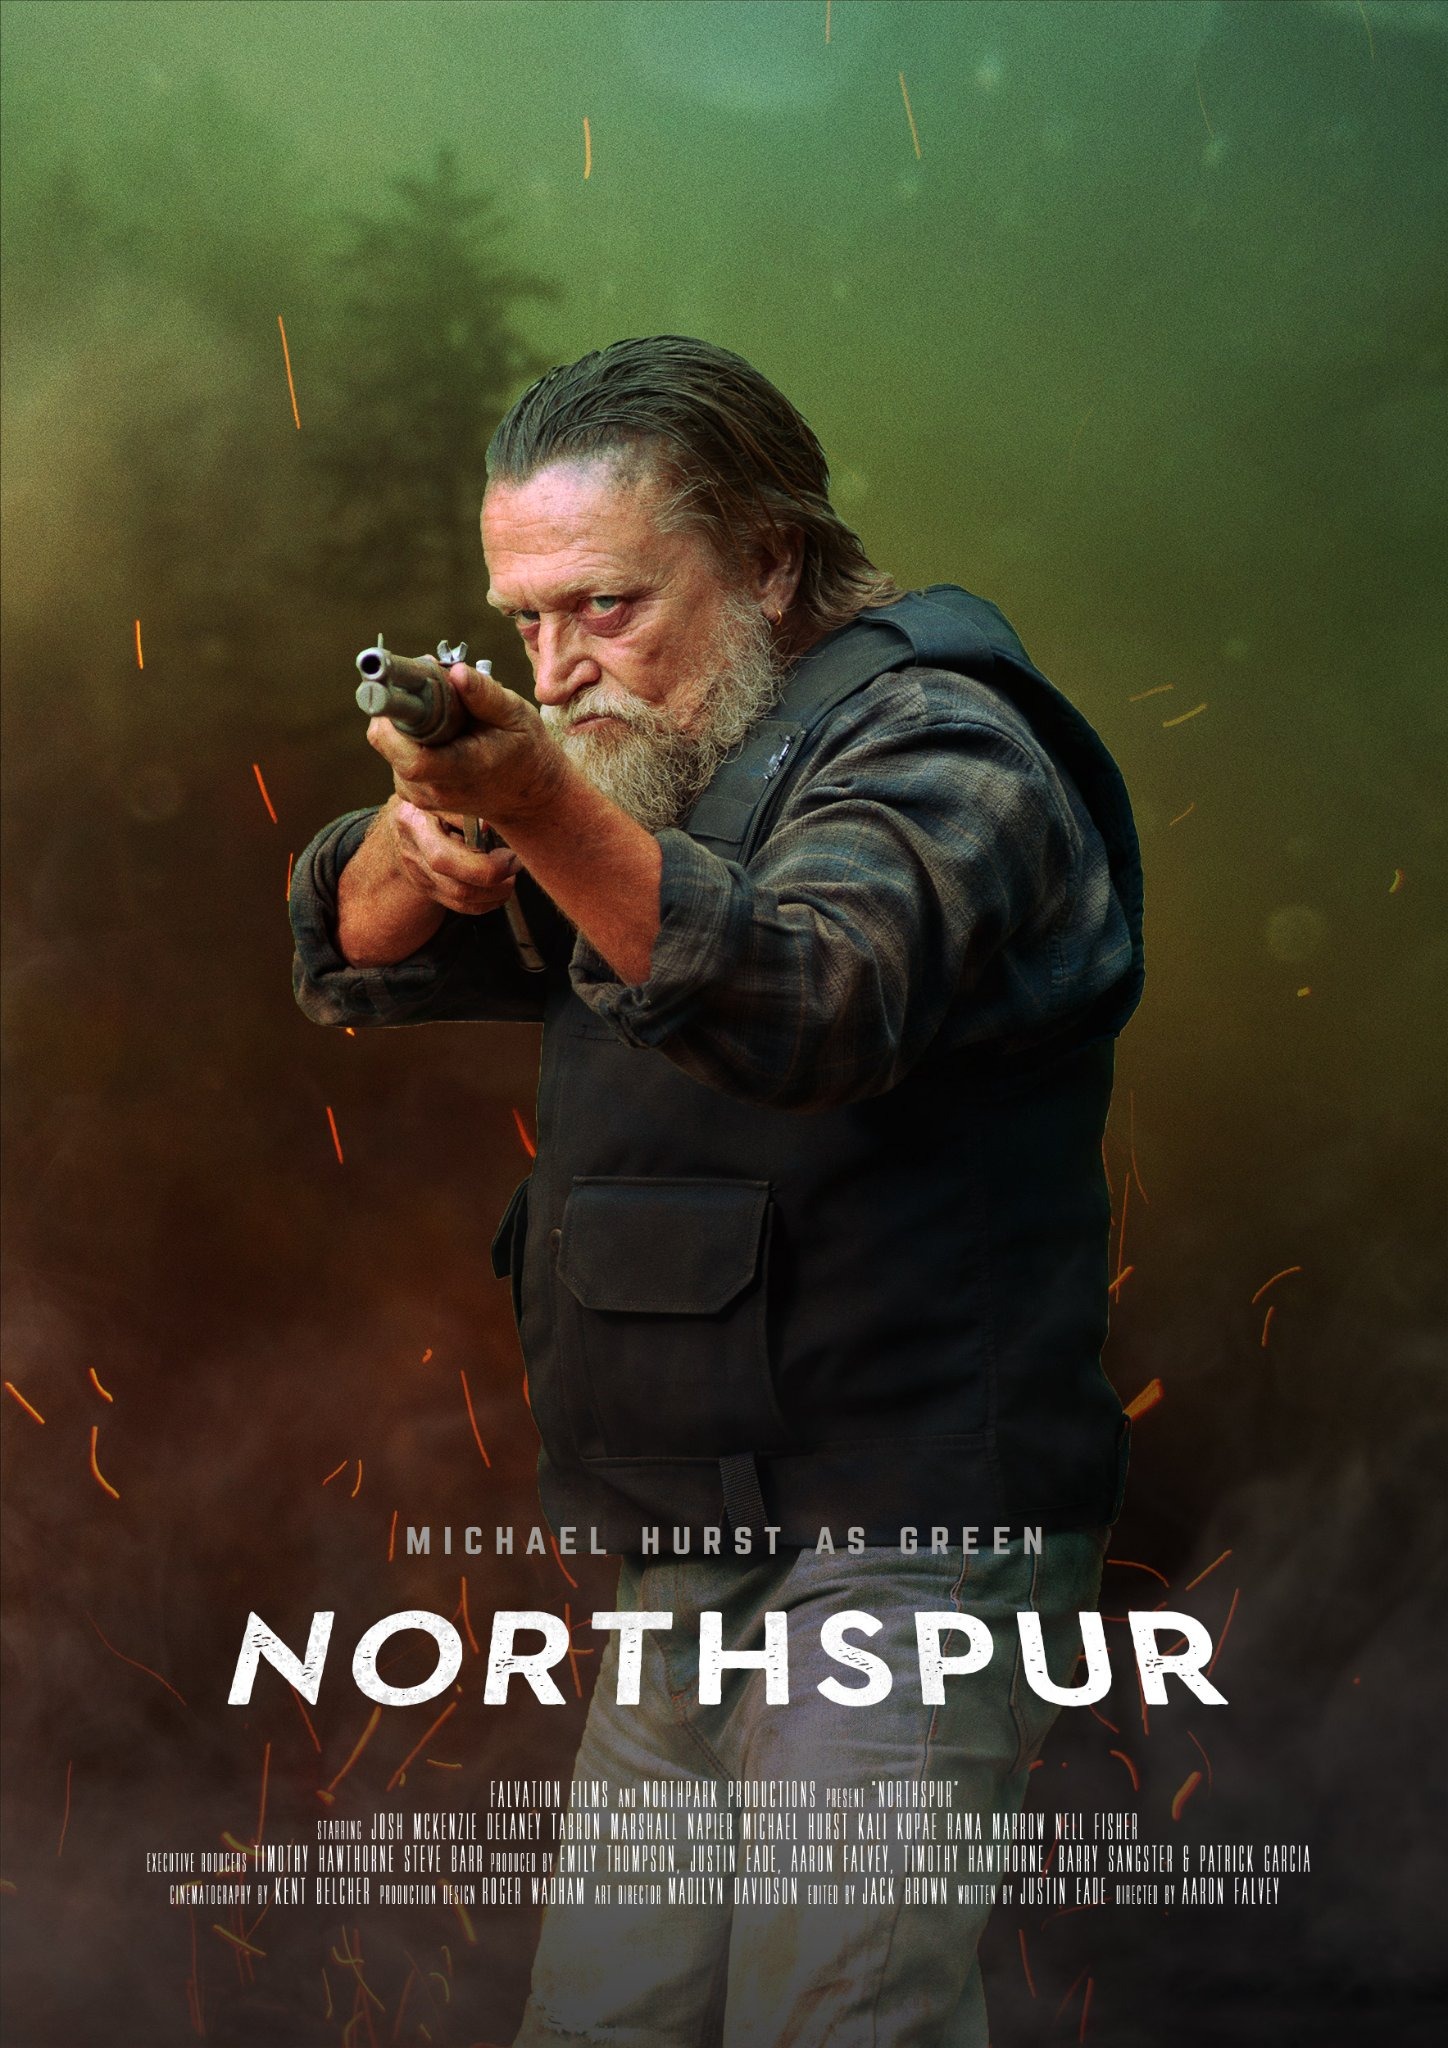 Northspur (#6 of 8): Mega Sized Movie Poster Image - IMP Awards